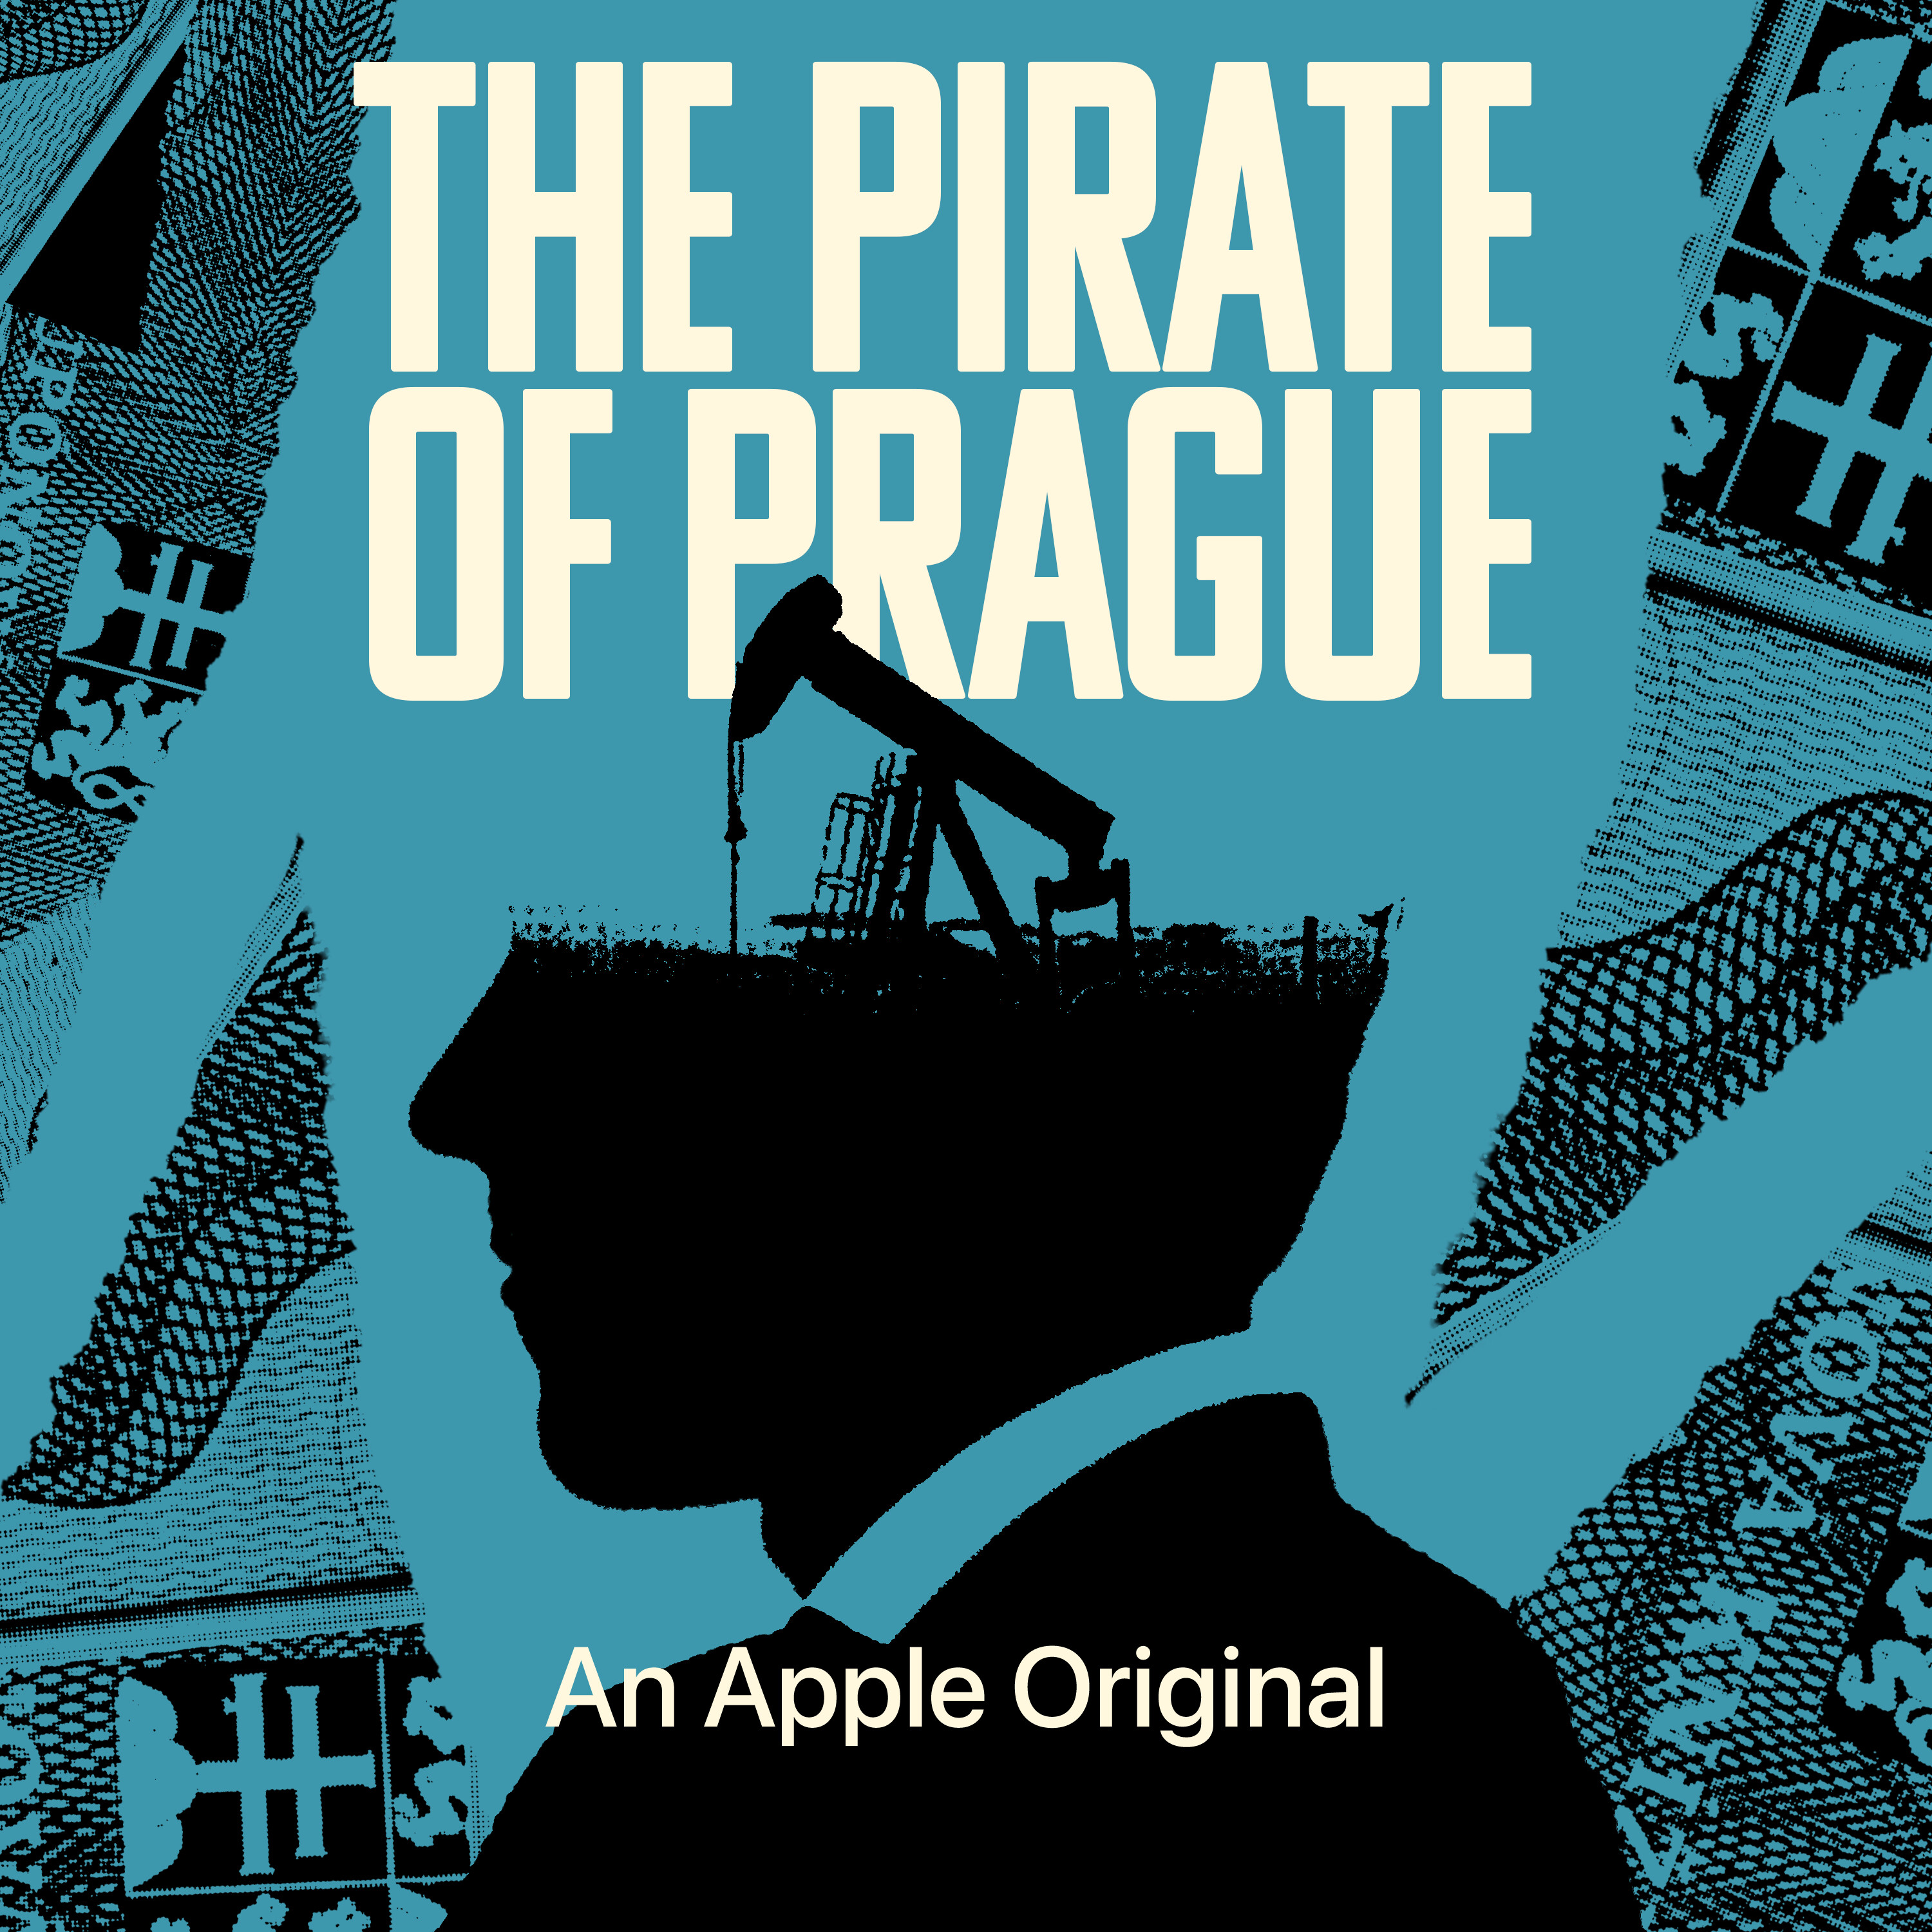 The Pirate of Prague podcast show image